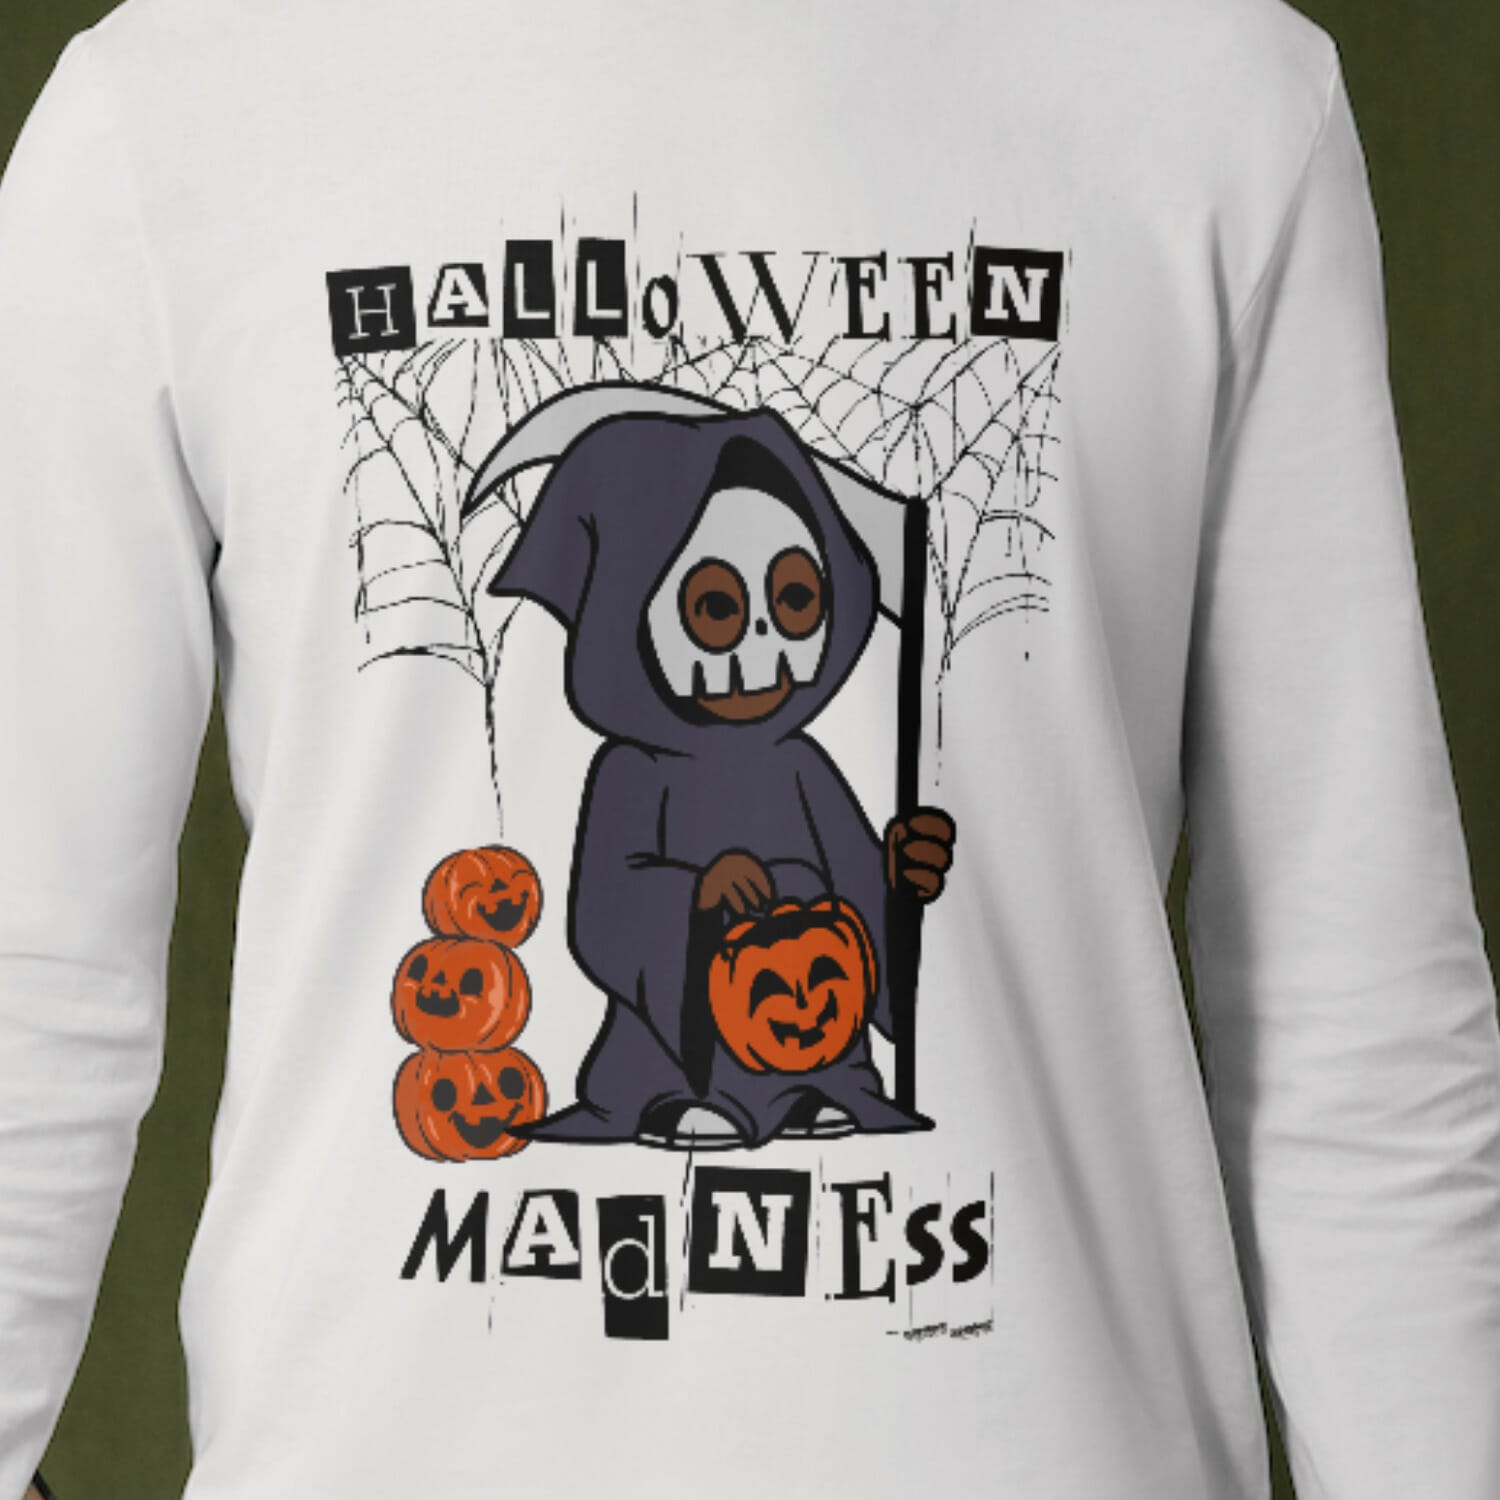 Halloween madness - Grimm Reaper Tshirt Design